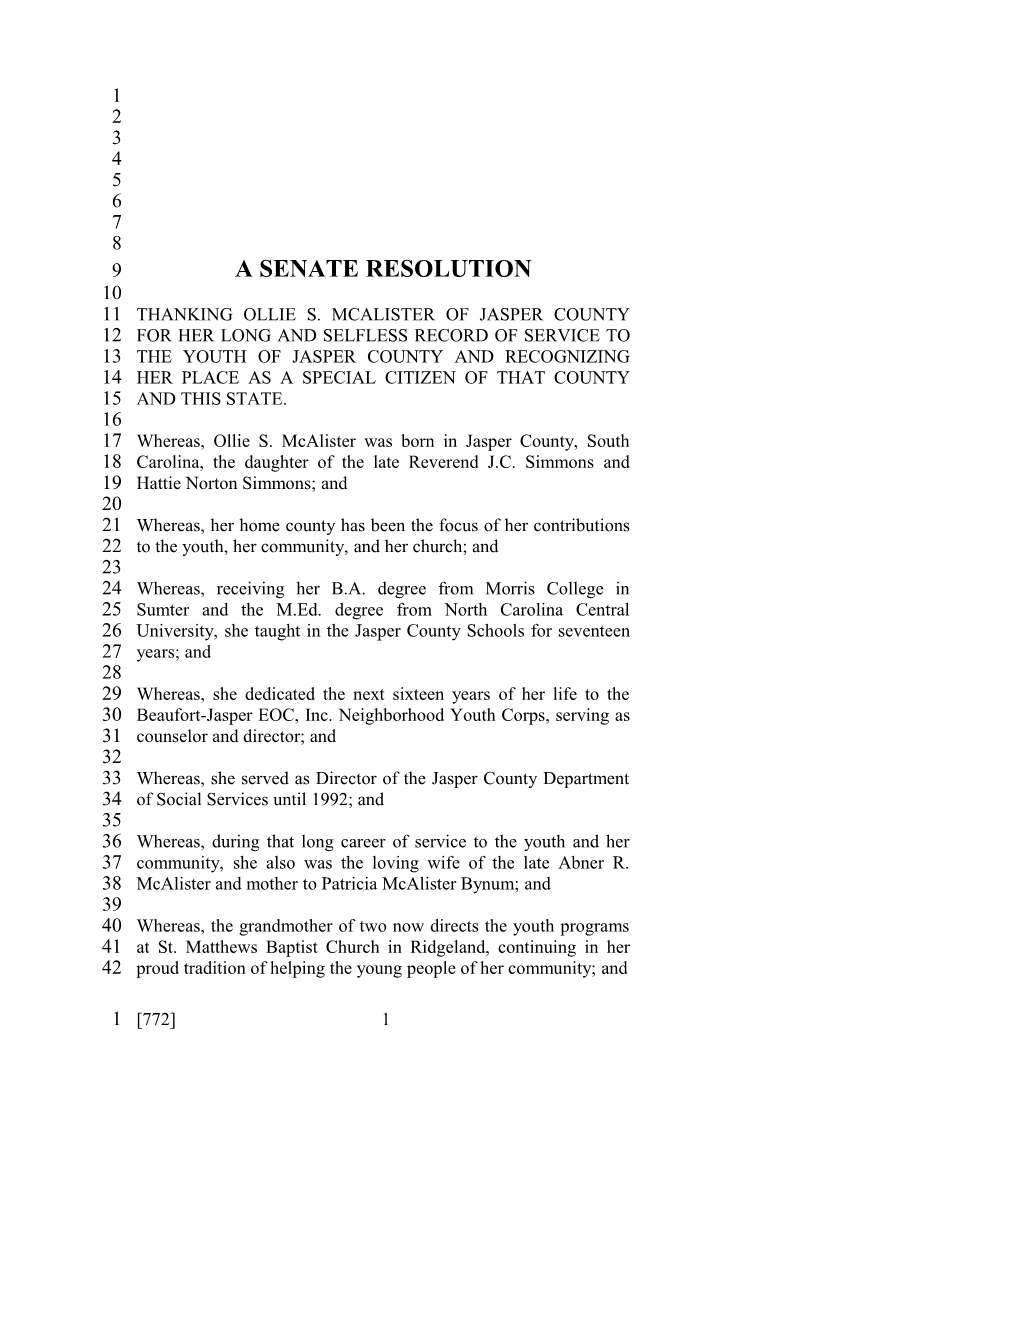 A Senate Resolution s12